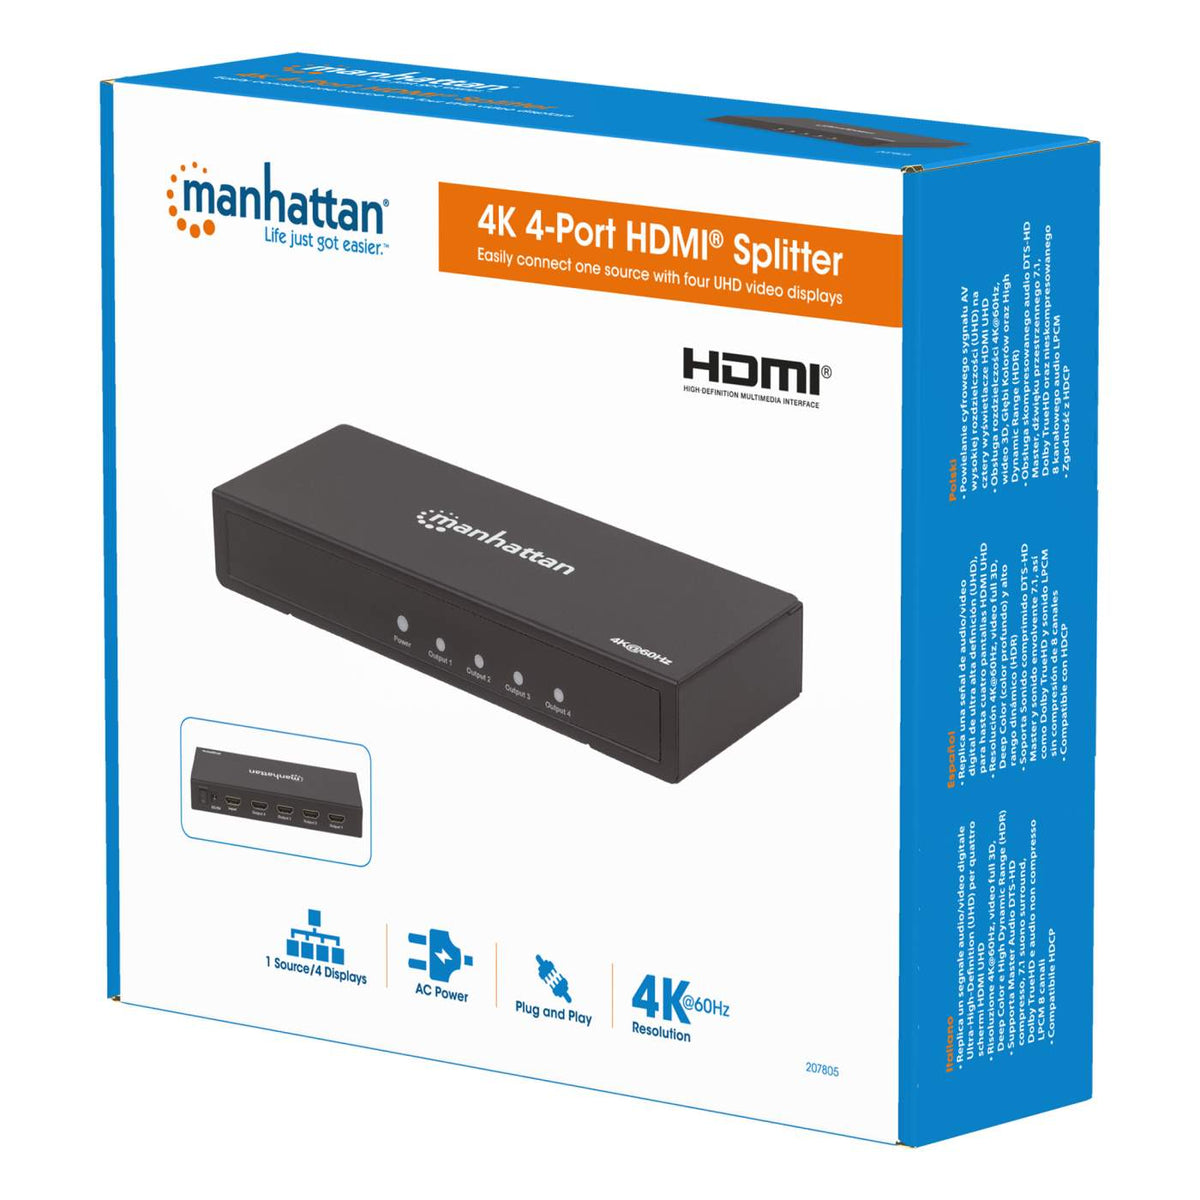 Manhattan 4K 4-Port HDMI Splitter (207805)